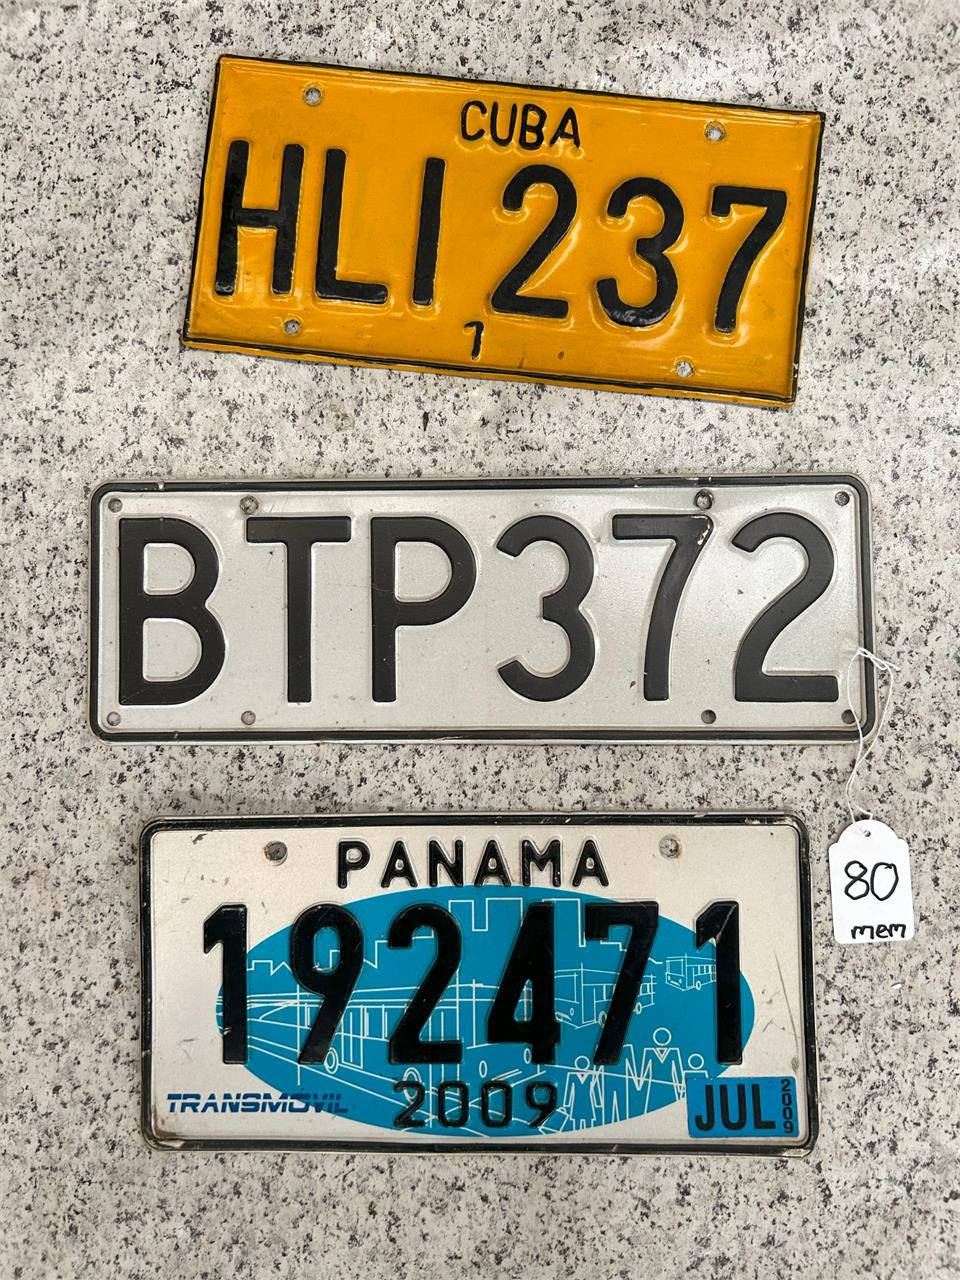 3 International Number plates